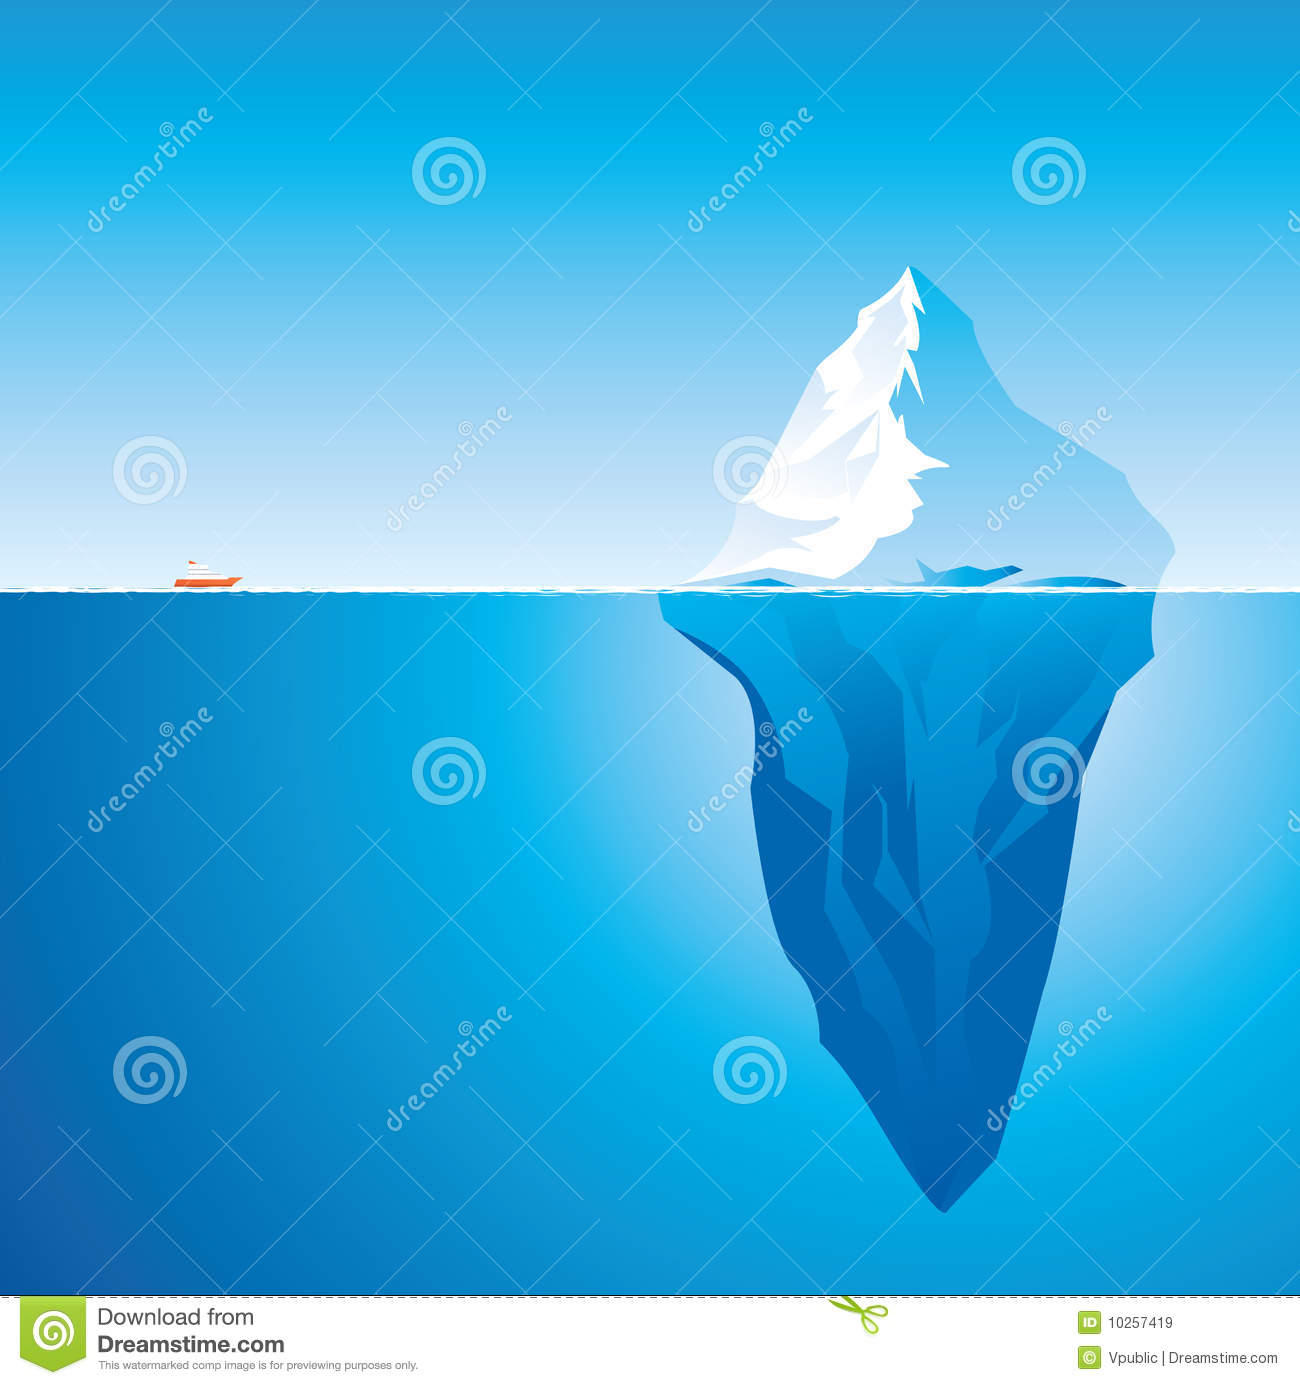 Iceberg Royalty Free Stock Images